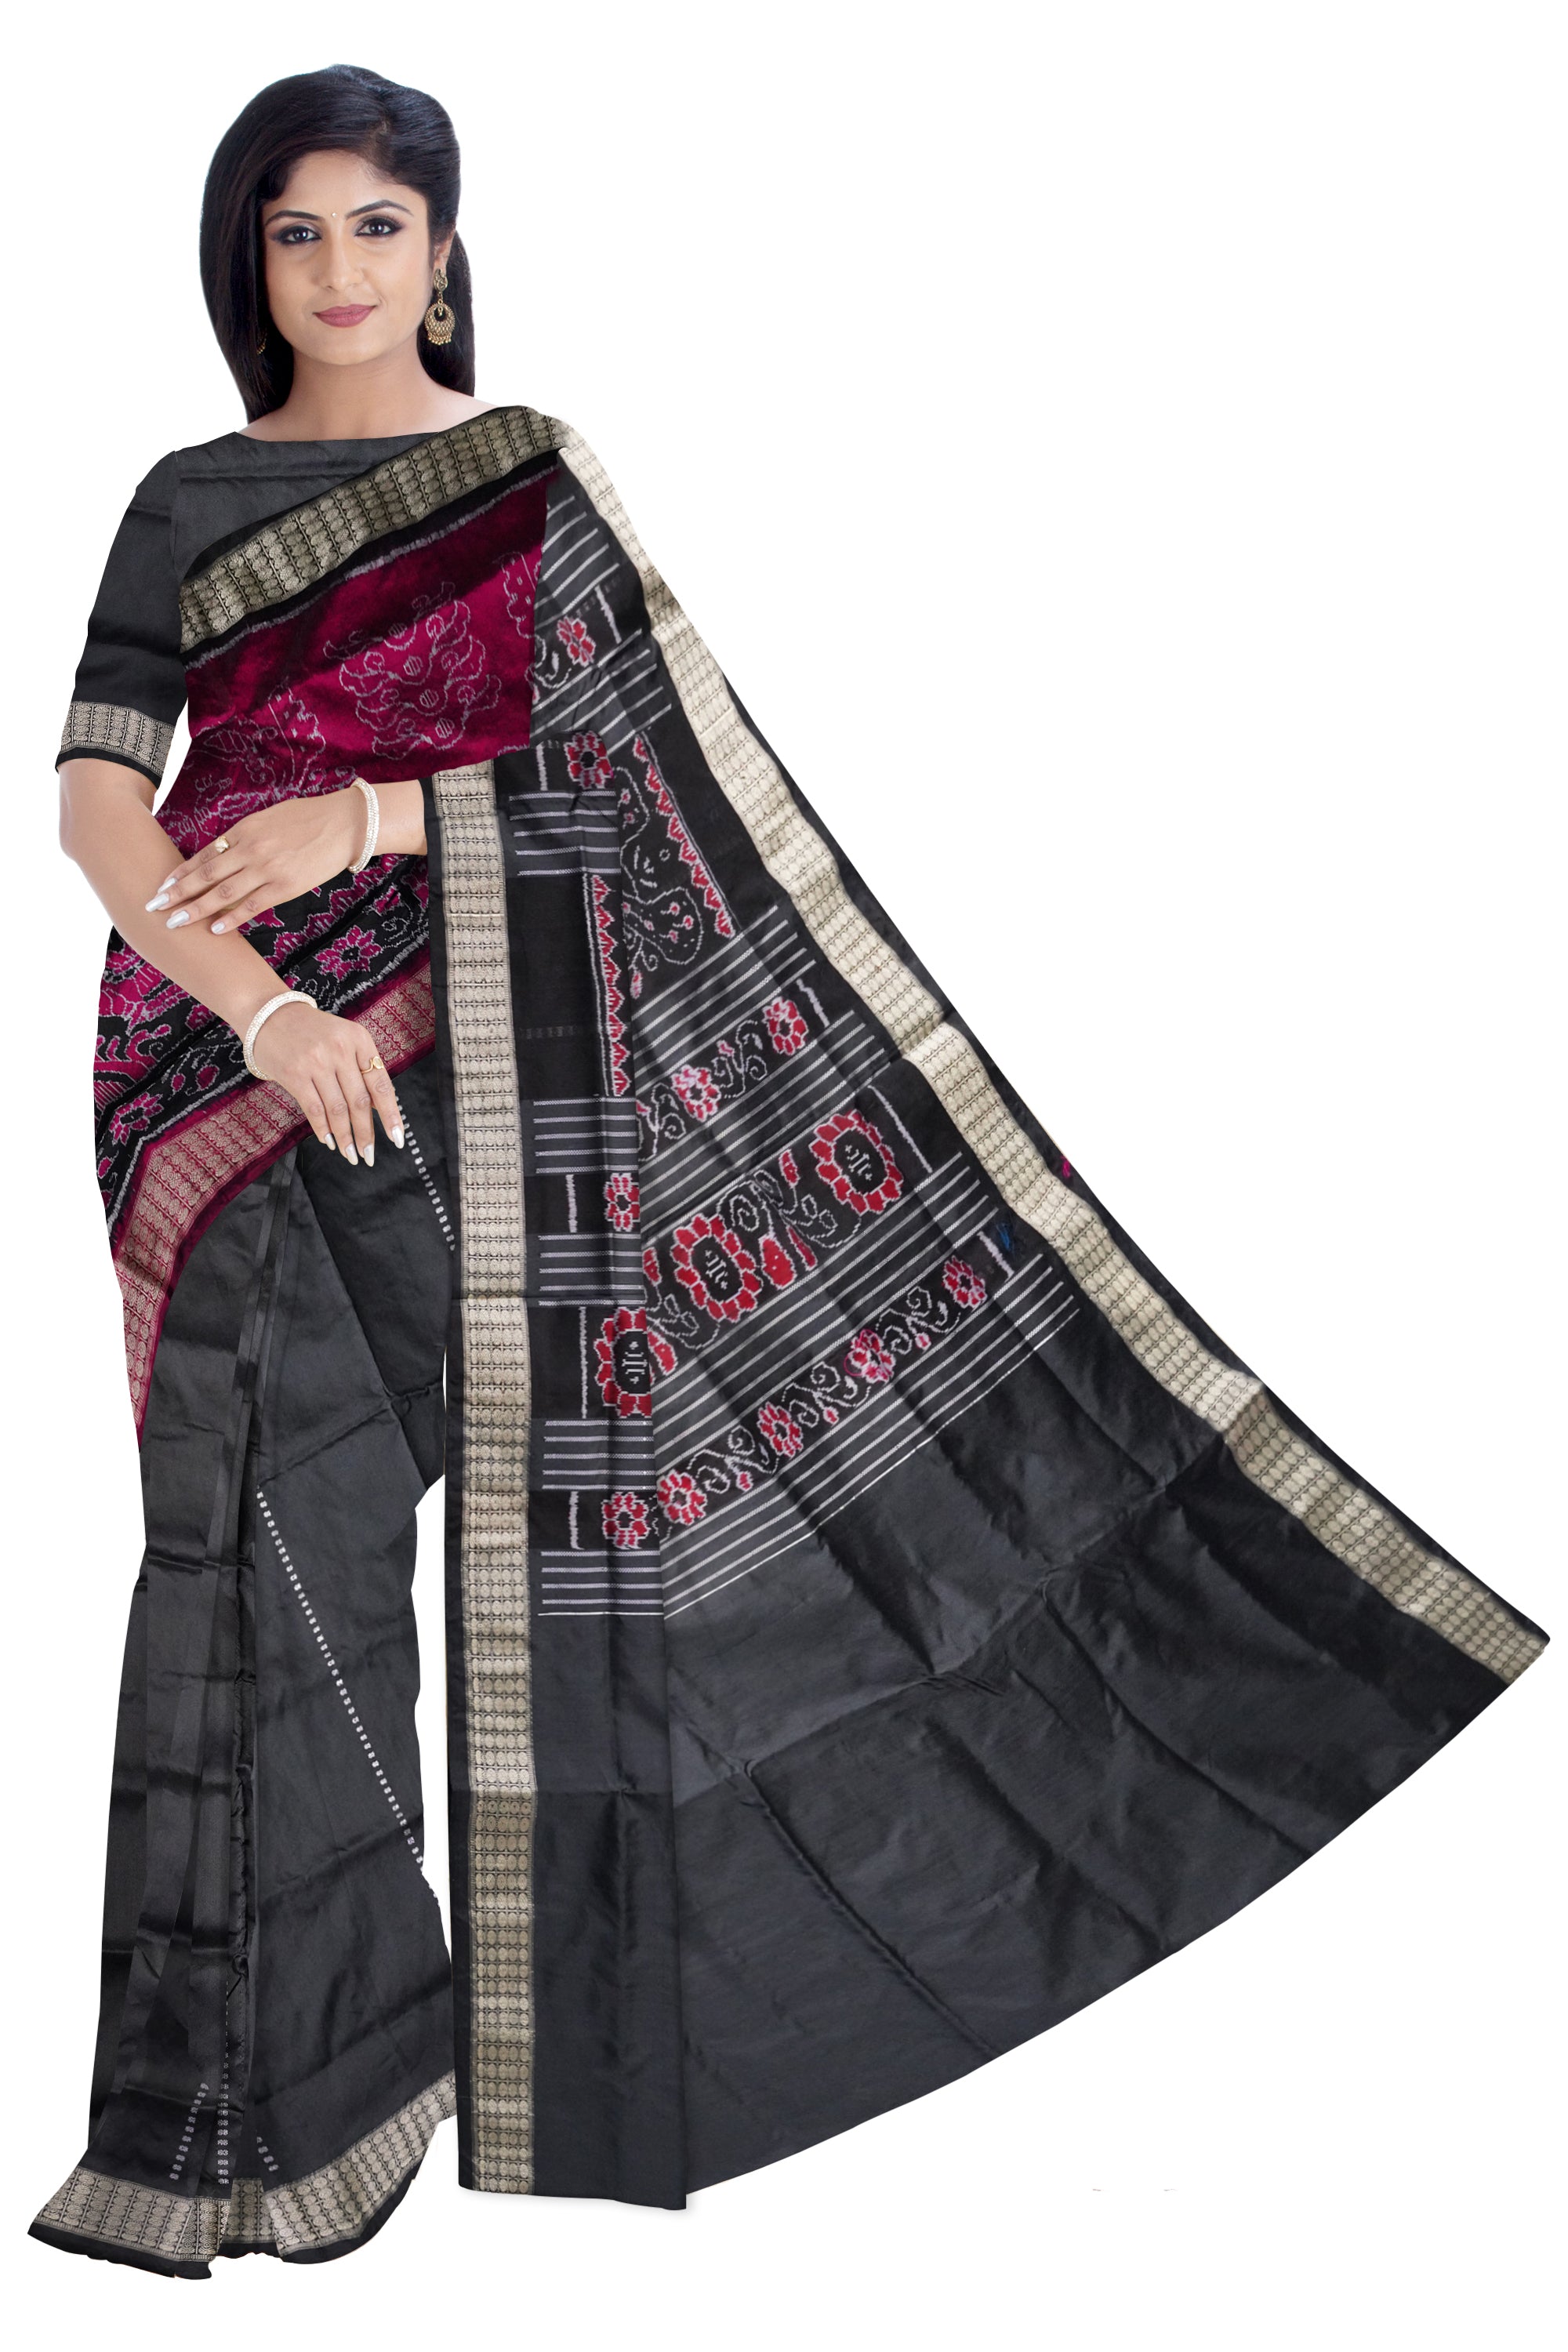 Nartaki with Peacock pattern patli pata saree in Deep-pink & Black color. - Koshali Arts & Crafts Enterprise